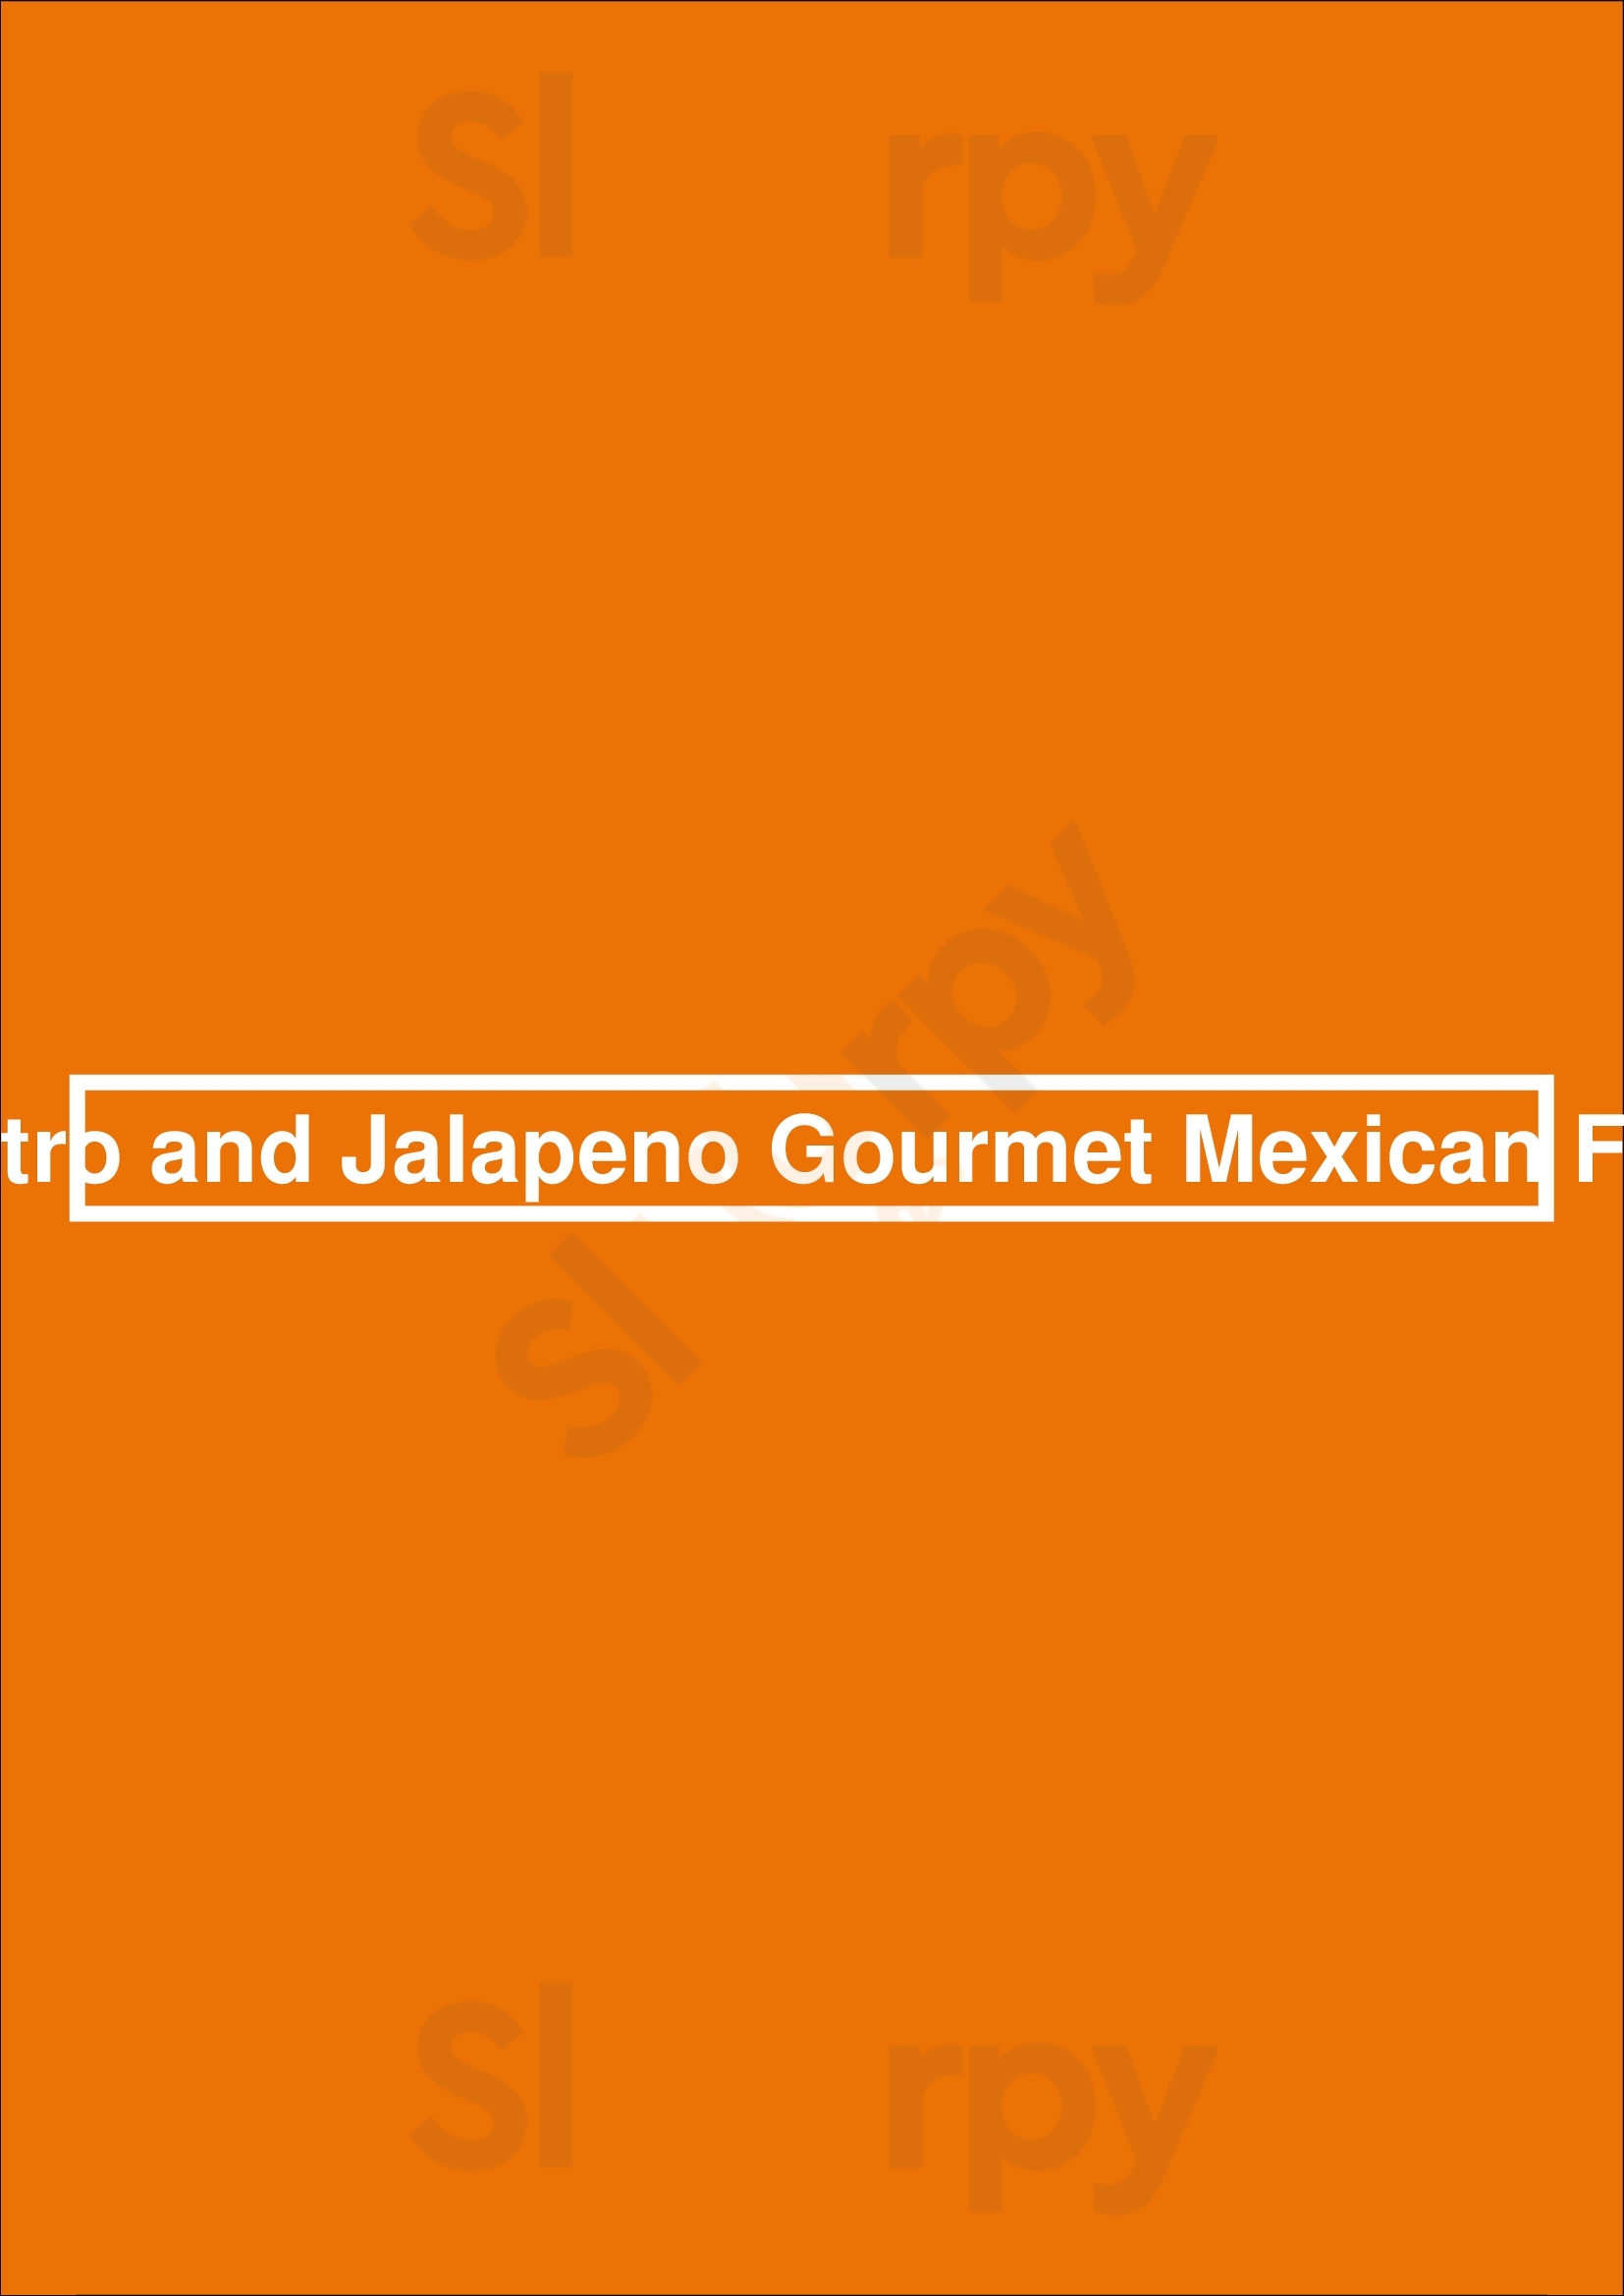 Cilantro And Jalapeno Gourmet Mexican Foods North Vancouver Menu - 1